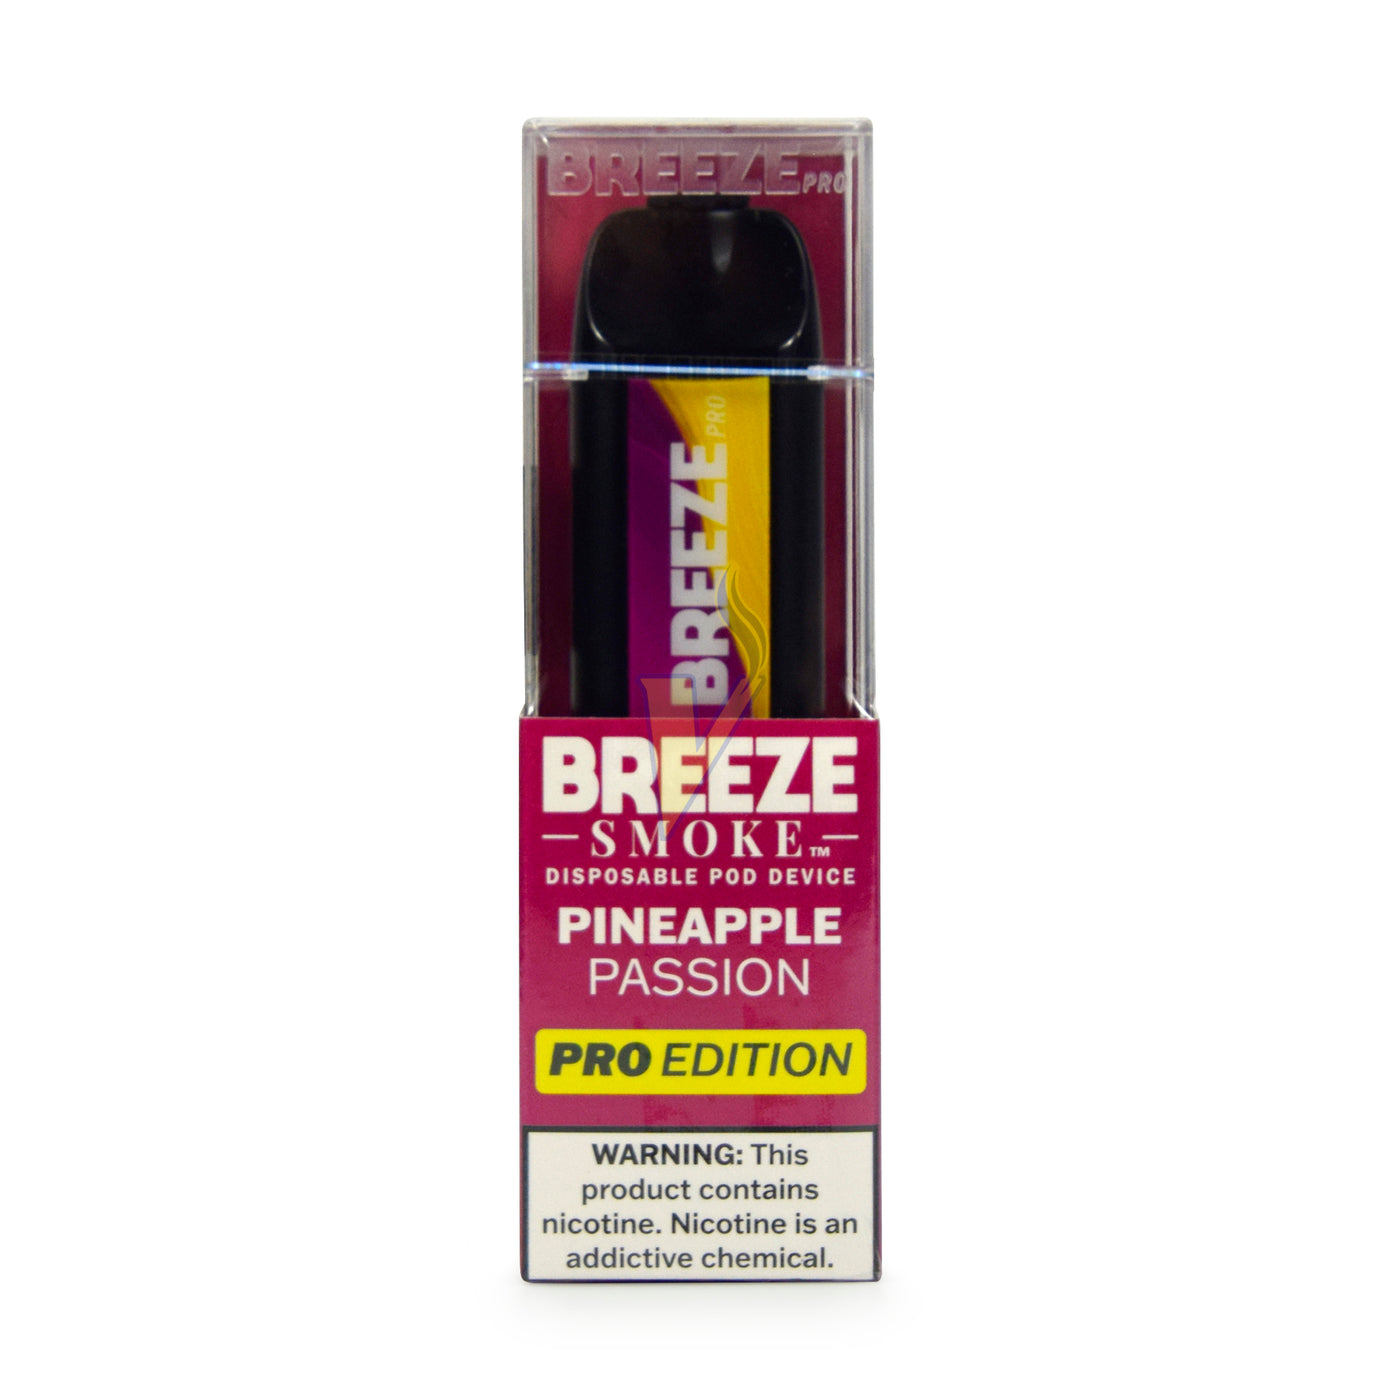 Breeze Pro TFN Disposable $15.99